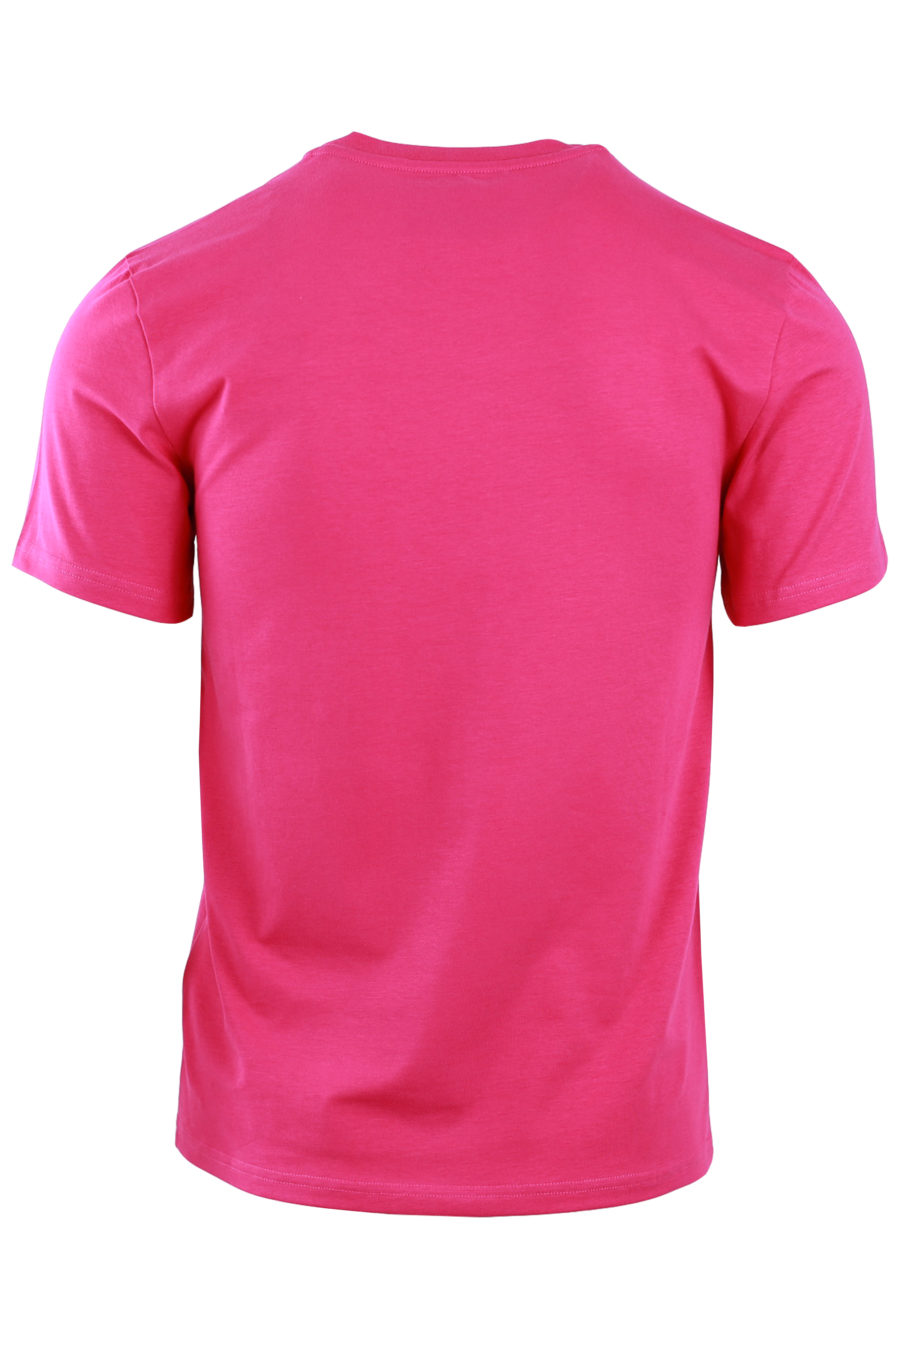 Camiseta rosa con logo negro - 8a1302e96fadf5a0d7433adc9563fb0f1f1ca8e9